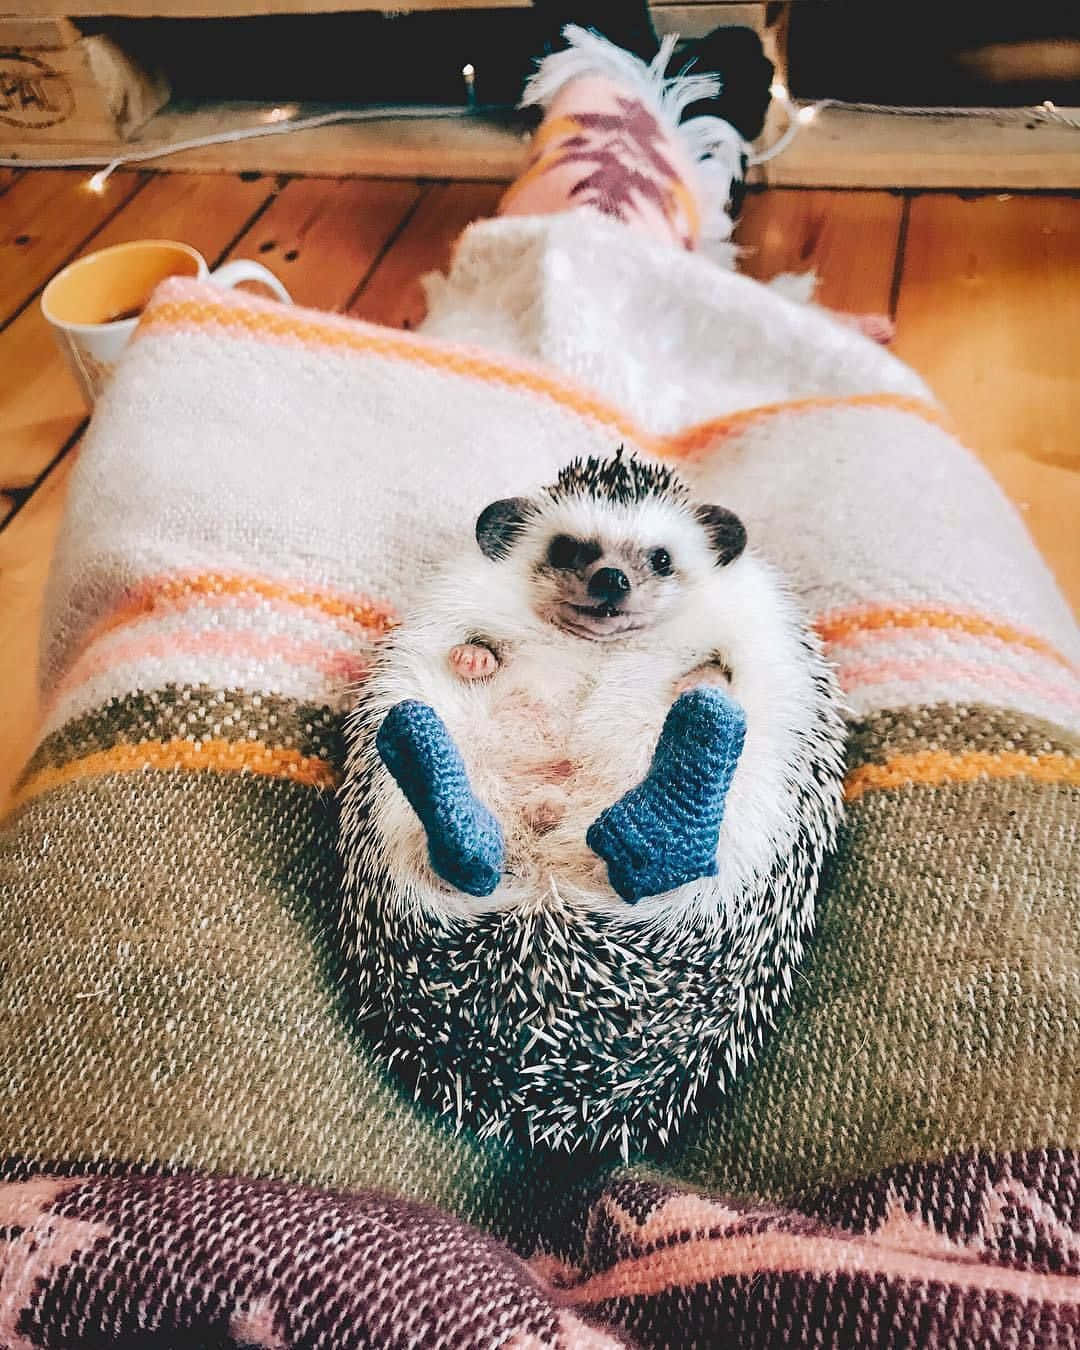 Cute Hedgehog On Pillow Wearing Socks Picture